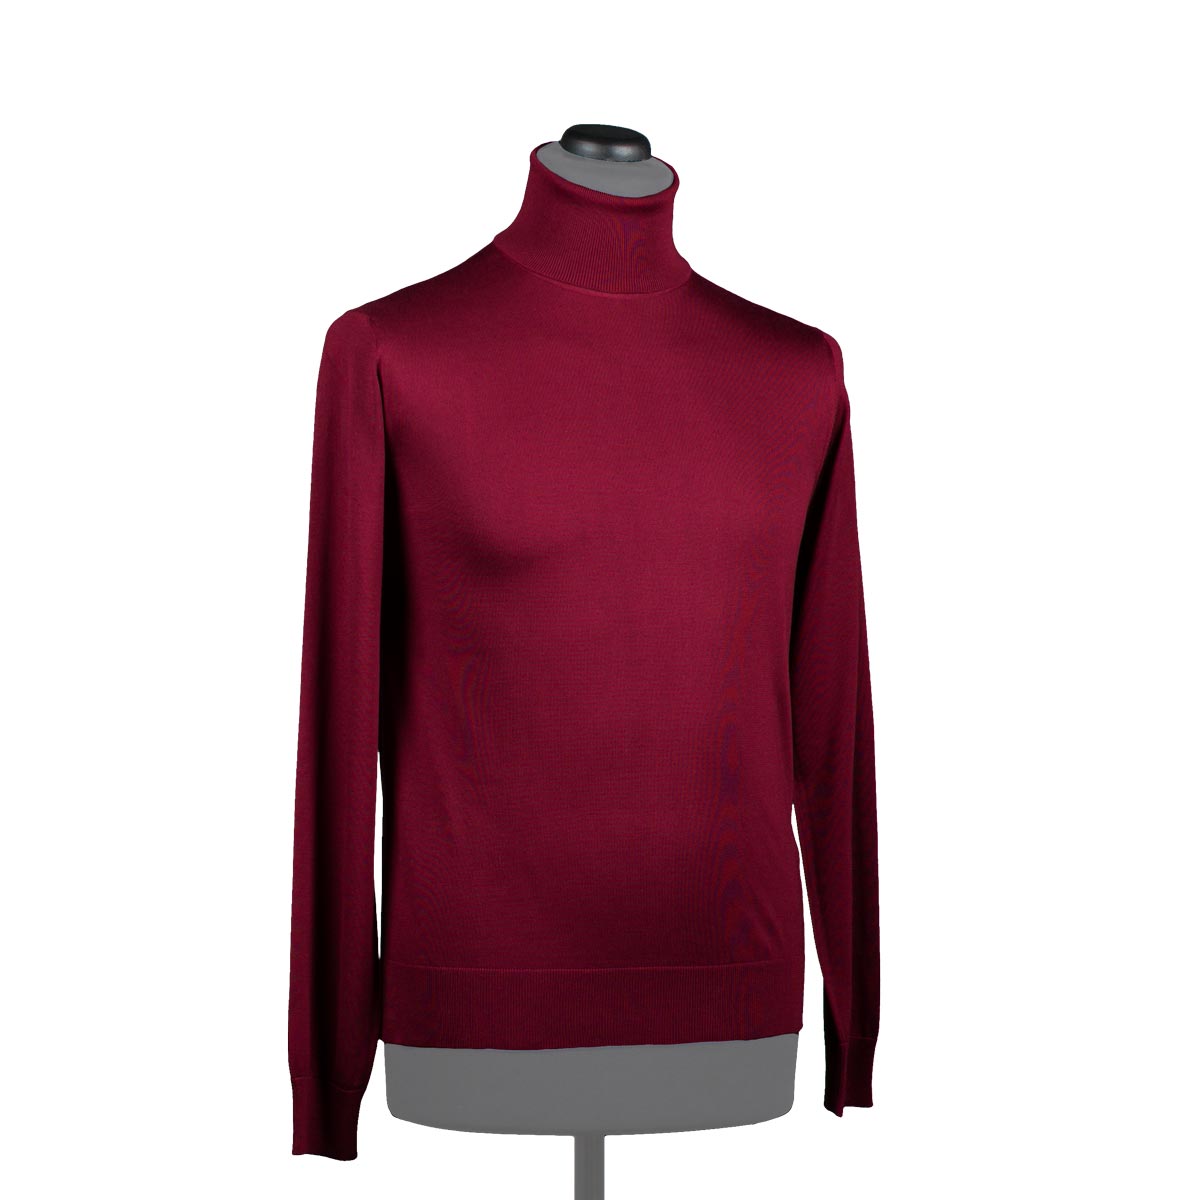 Silk turtleneck sweater for men, burgundy - Di Franco Moda Italiana